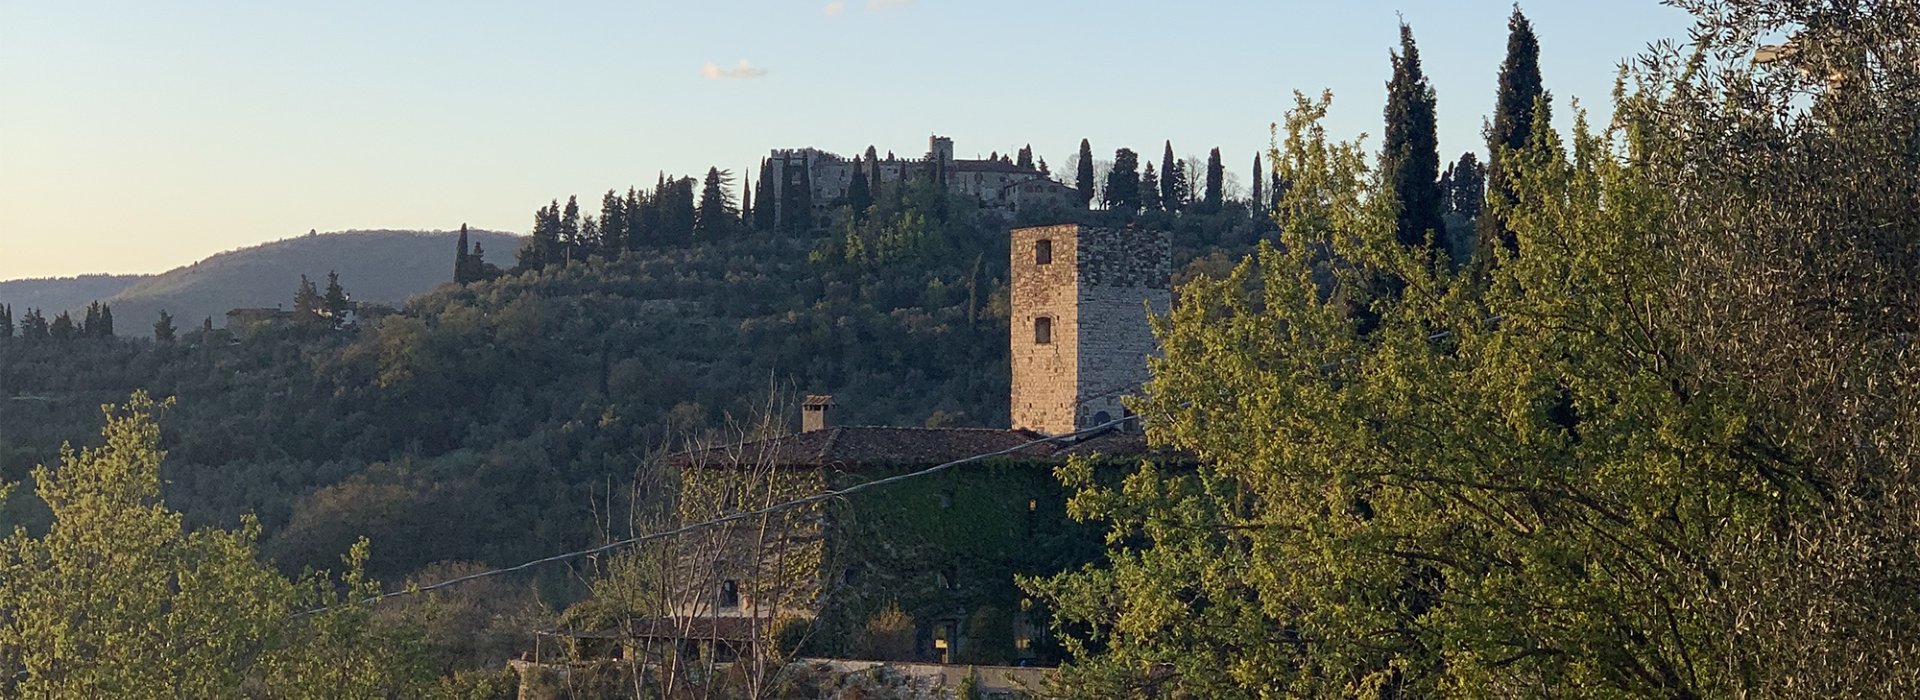 Castelli di Belforte e Monteacuto